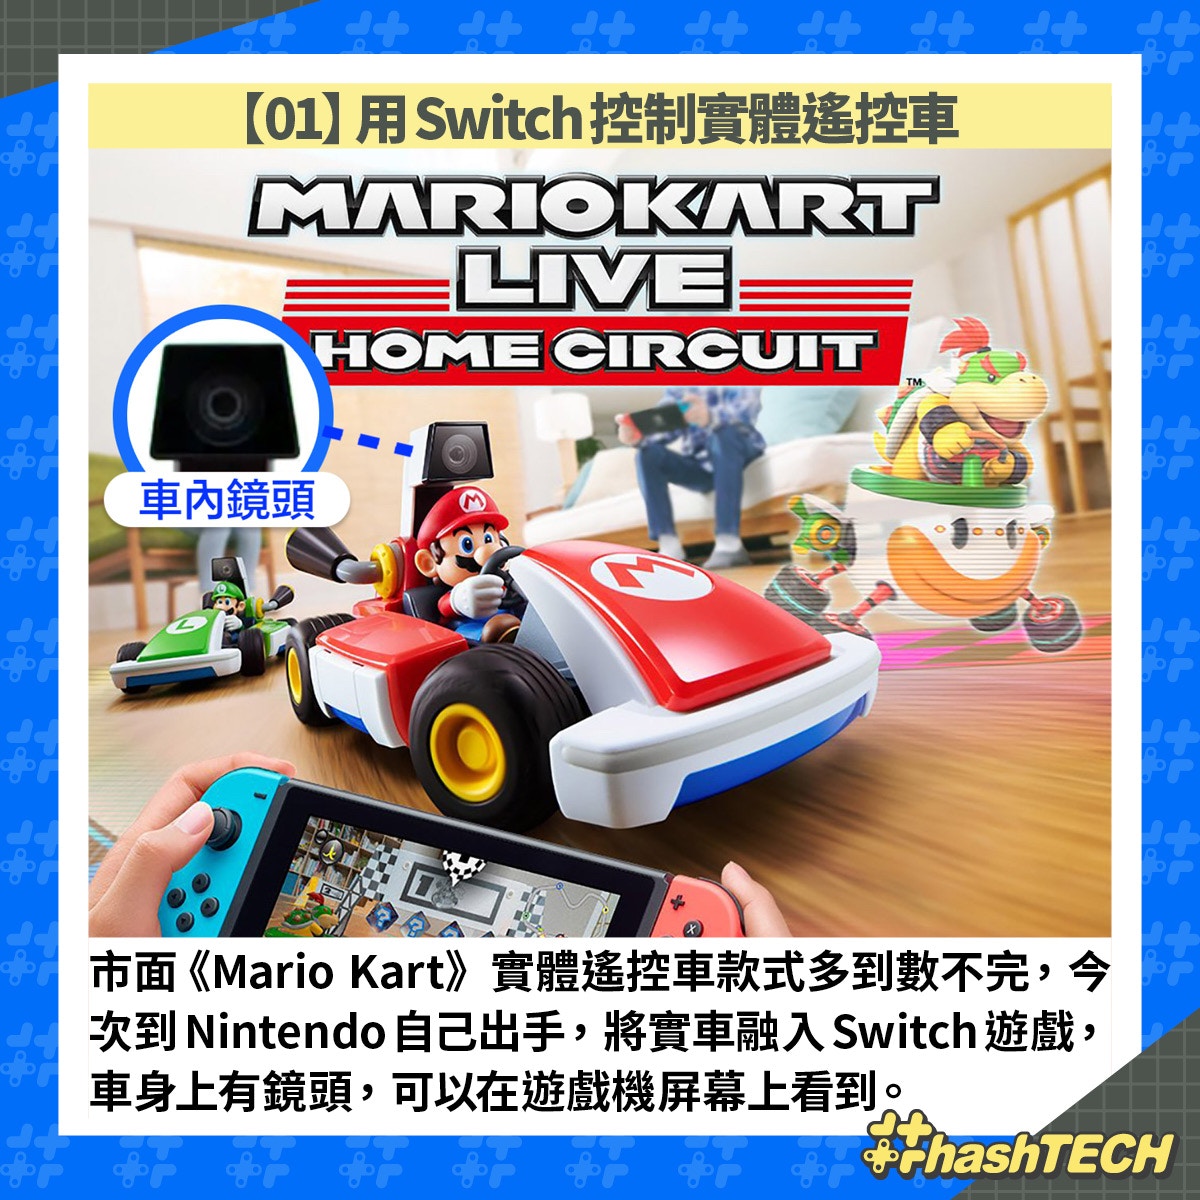 Switch Mario Kart Live Home Circuit 遙控實體孖車整ar賽道